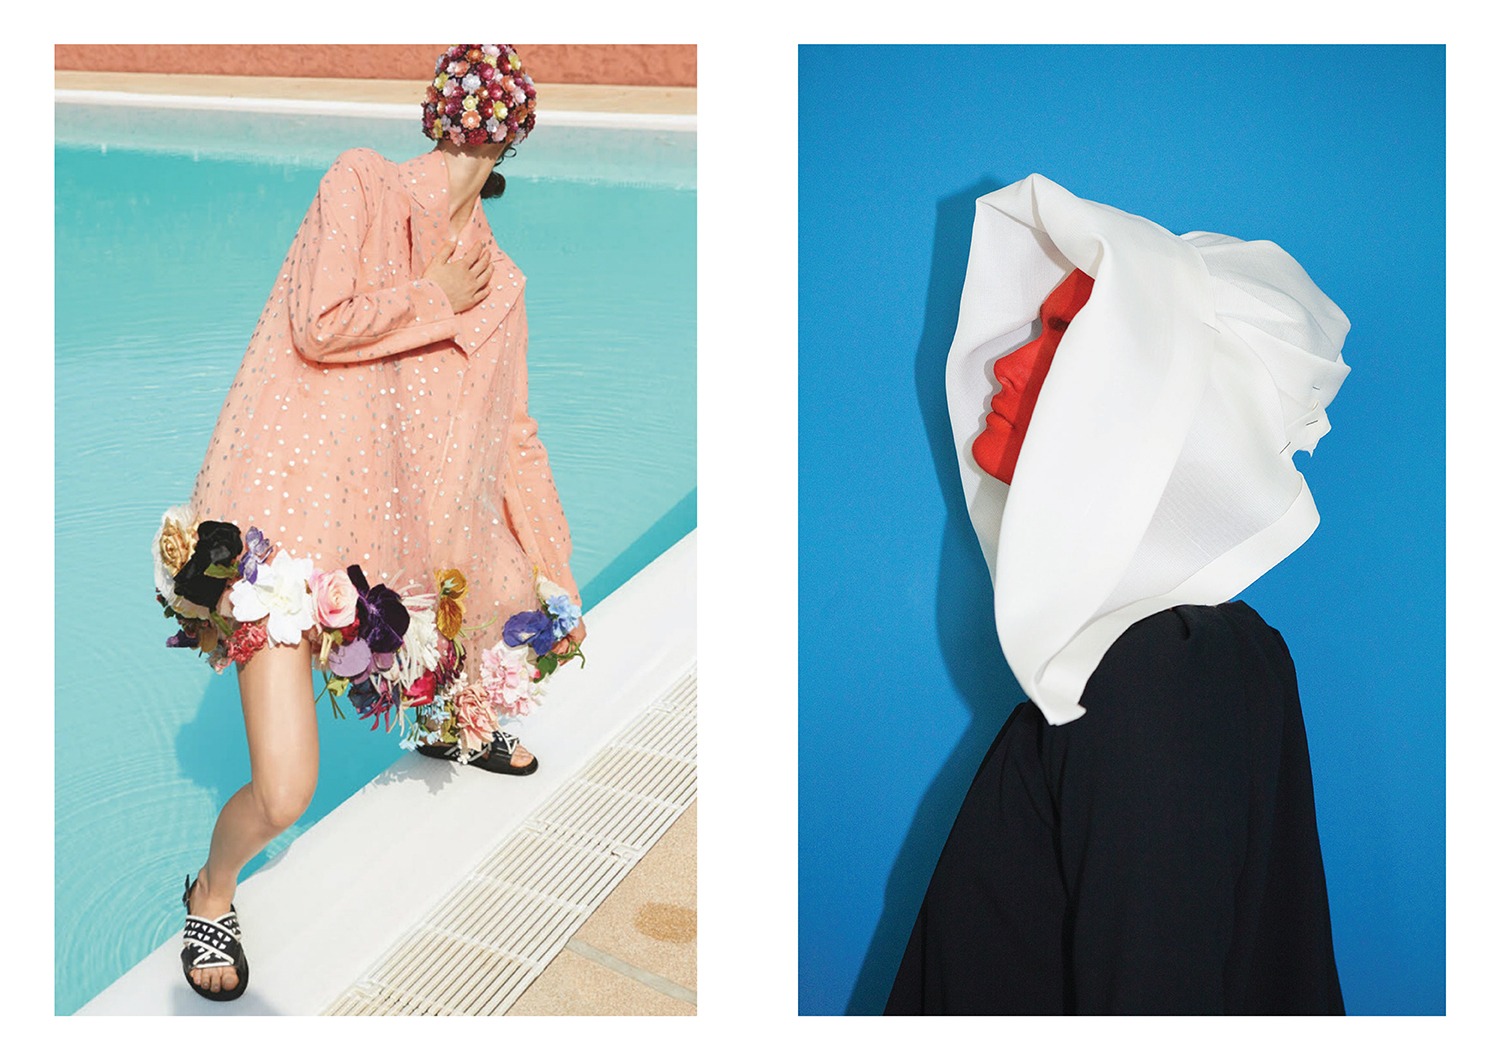 Inside Viviane Sassen's Analemma: Fashion Photography